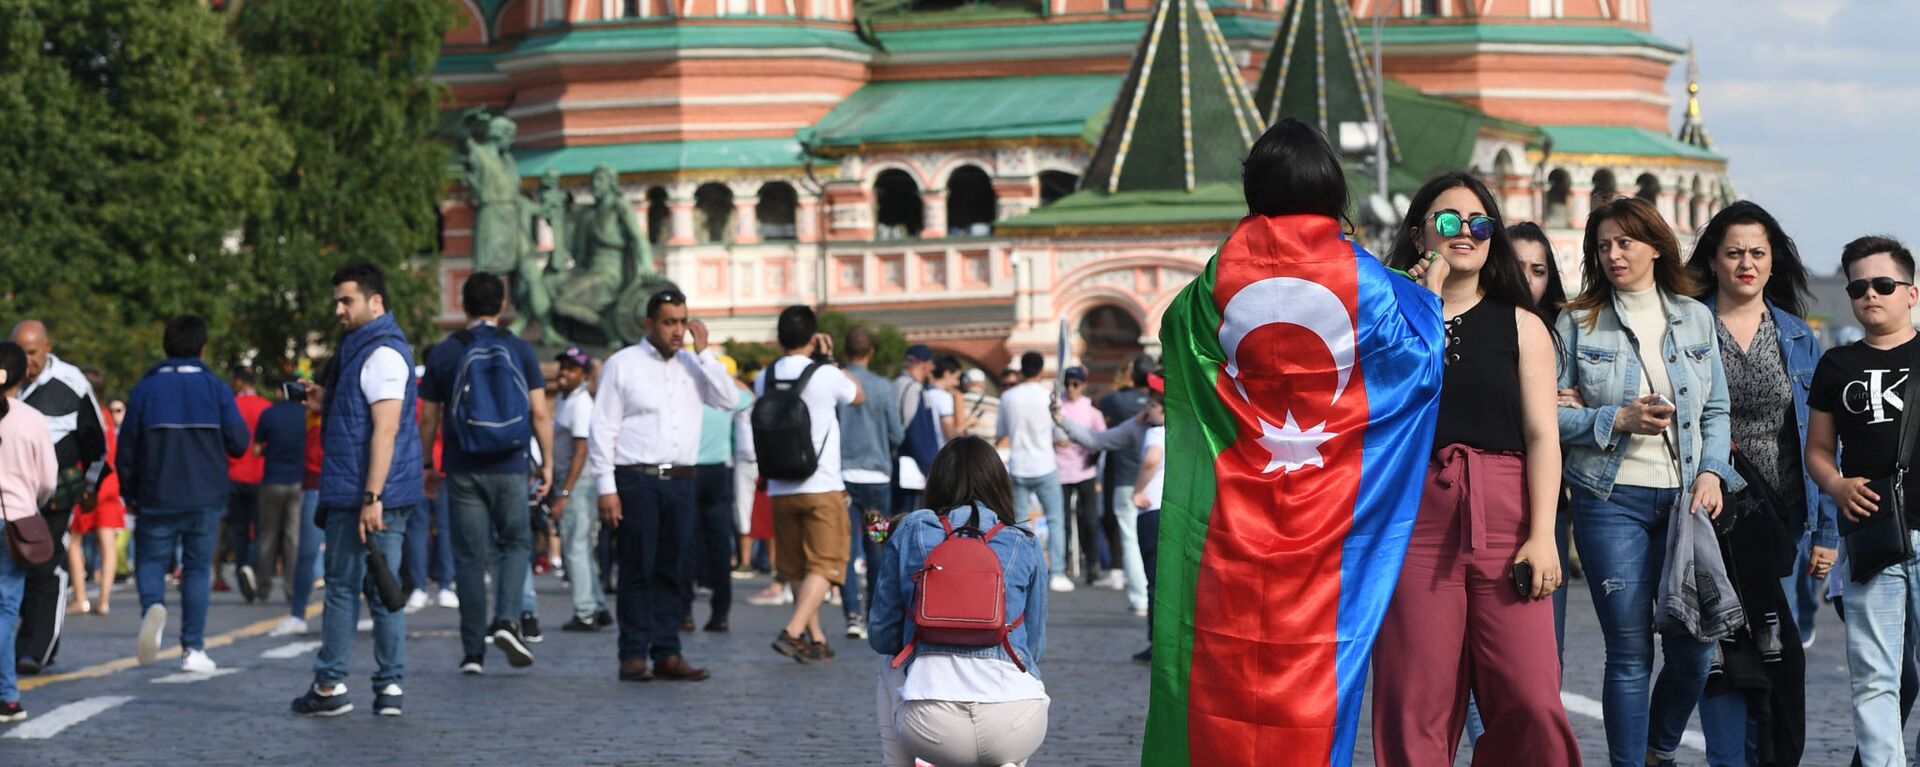 Девушка с флагом Азербайджана на Красной площади, фото из архива - Sputnik Азербайджан, 1920, 07.11.2021